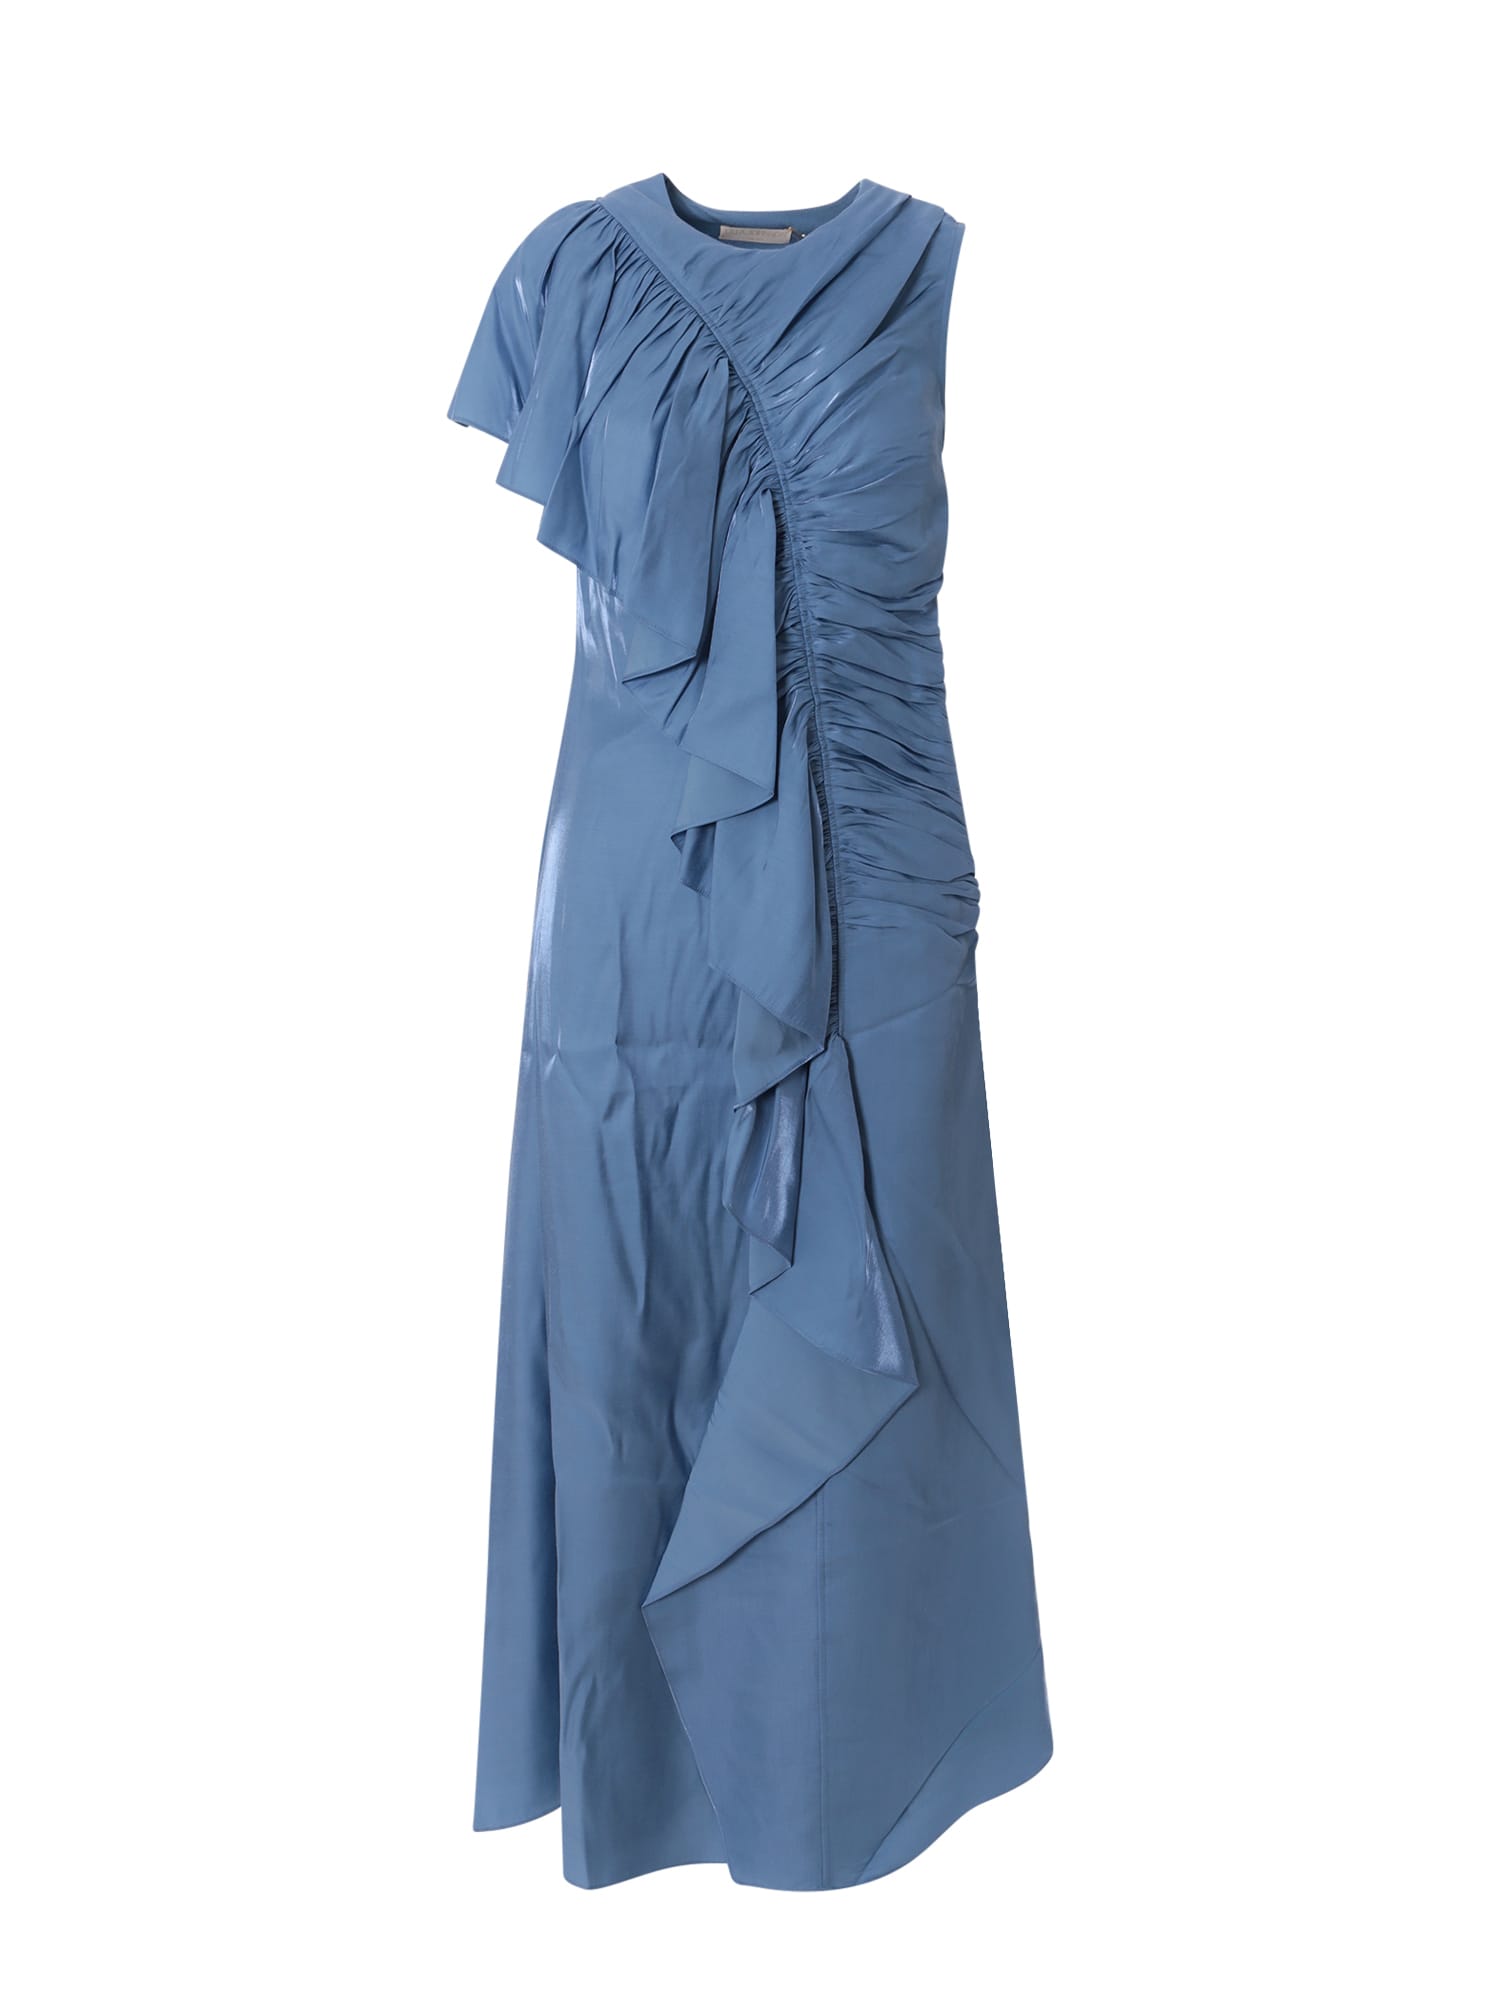 Lyl Fashion - 🇺🇸 SUMMER DRESS DRESSES 6500 KSH🇺🇸SIZES 14-24 📲☎️PLS  CHAT 0720350554 OR 0745718191 📌📌RE-INSURANCE PLAZA MEZANNINE FLOOR LYL  FASHION EXECUTIVE Agha- Khan